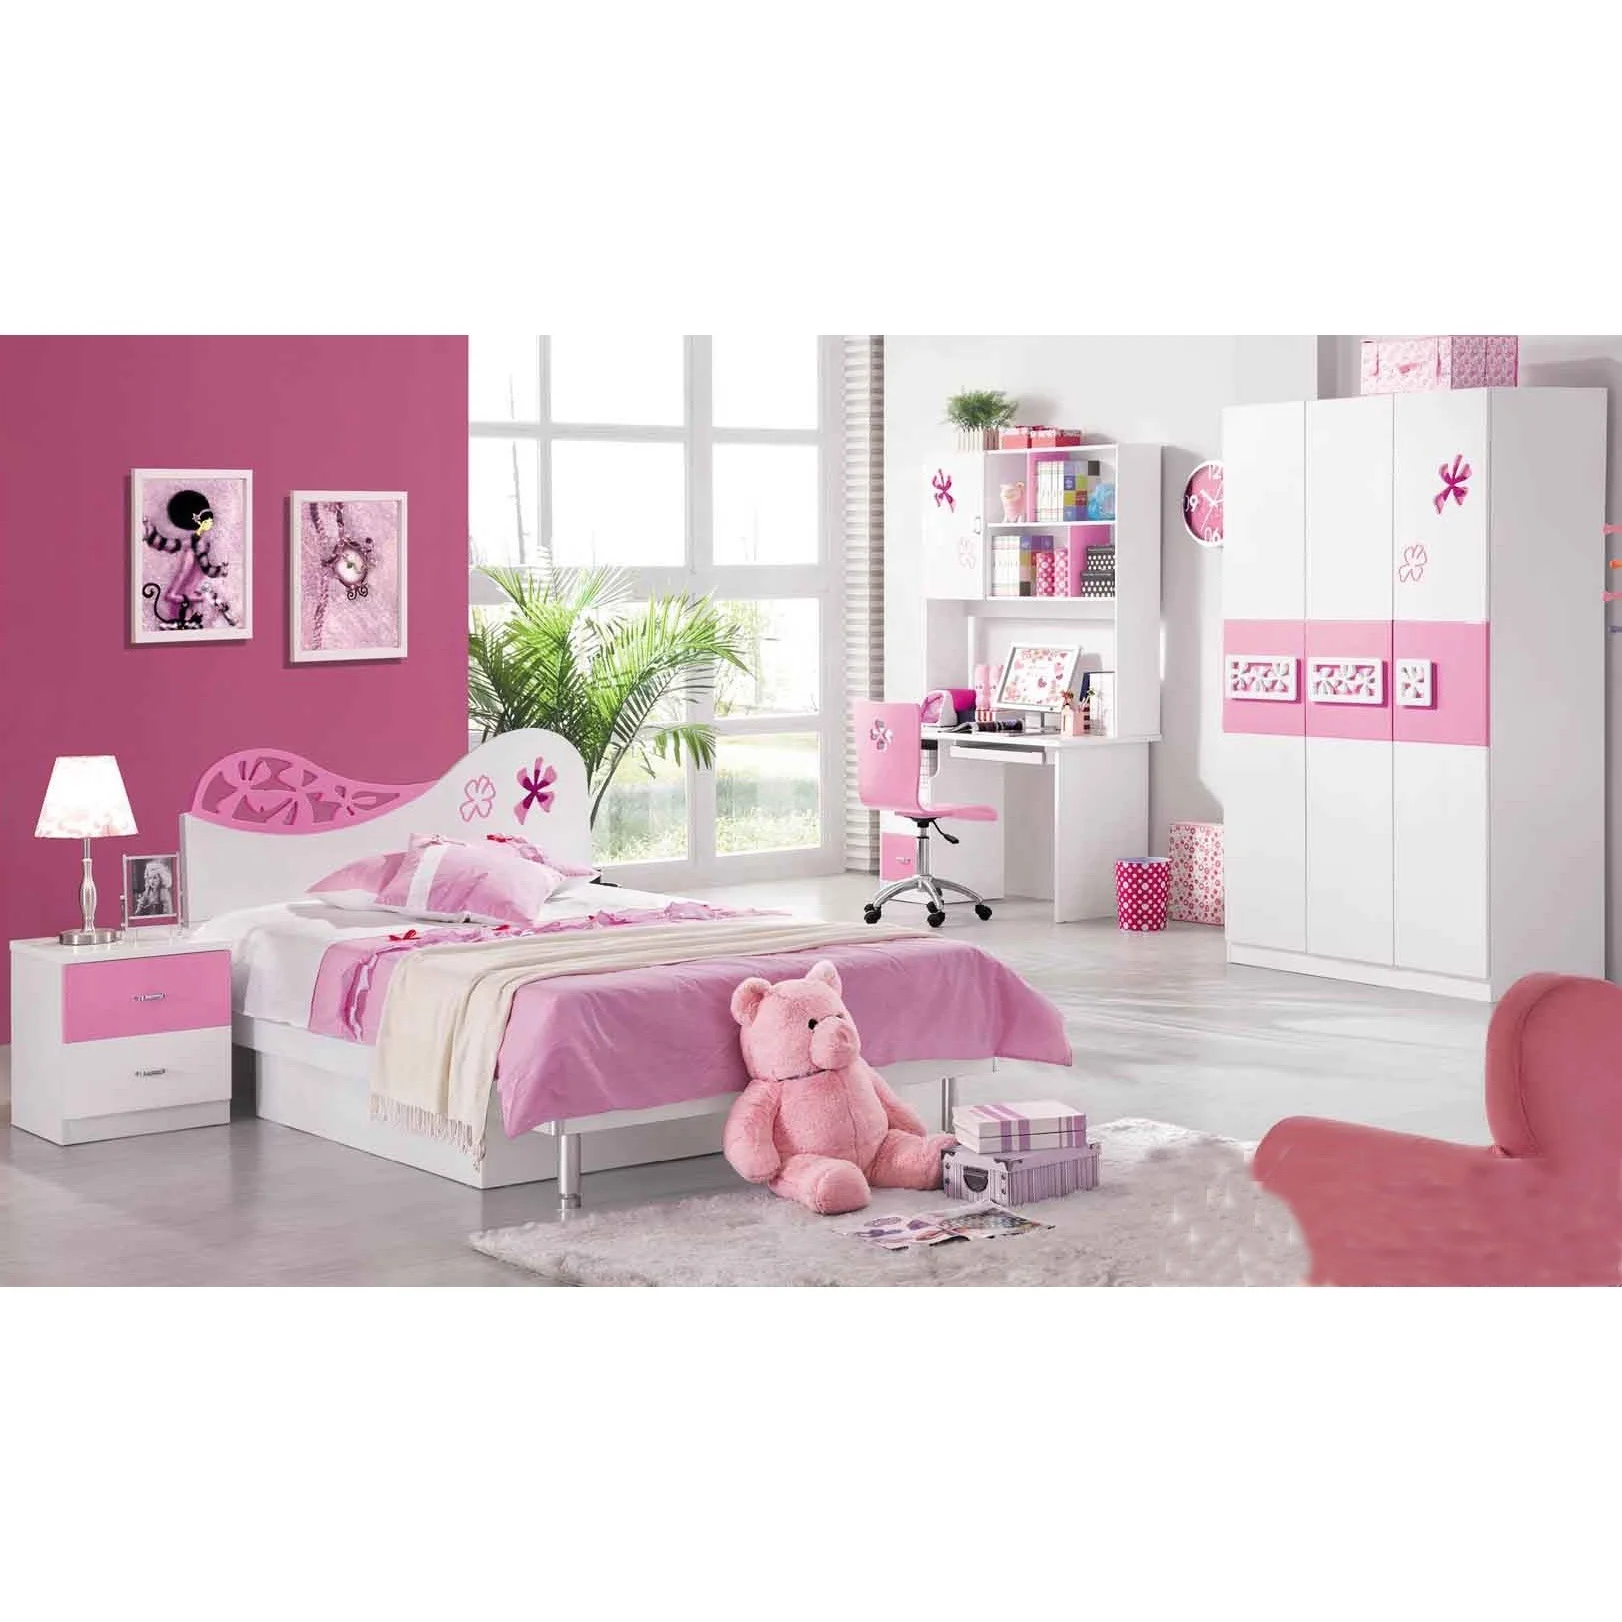 Whosale Price Single Kids Bed Bedroom Furniture Set For Girl Bed Storage Ul H890 Buy Bed Storage Children Bedroom Furniture Set Kids Bed Product On Alibaba Com